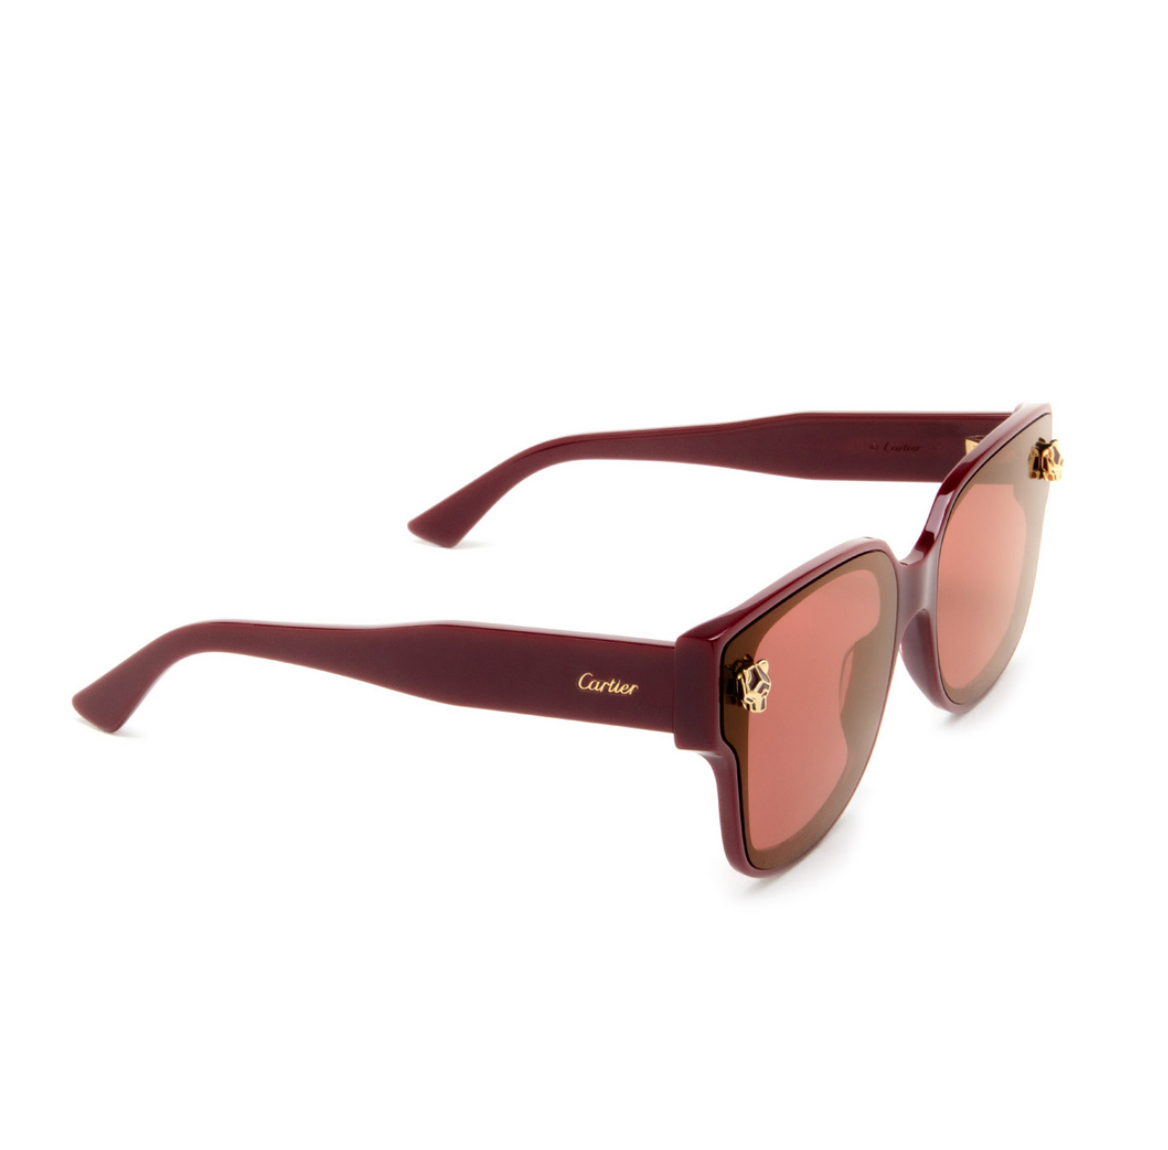 Cartier CT0357S-004 63mm New Sunglasses